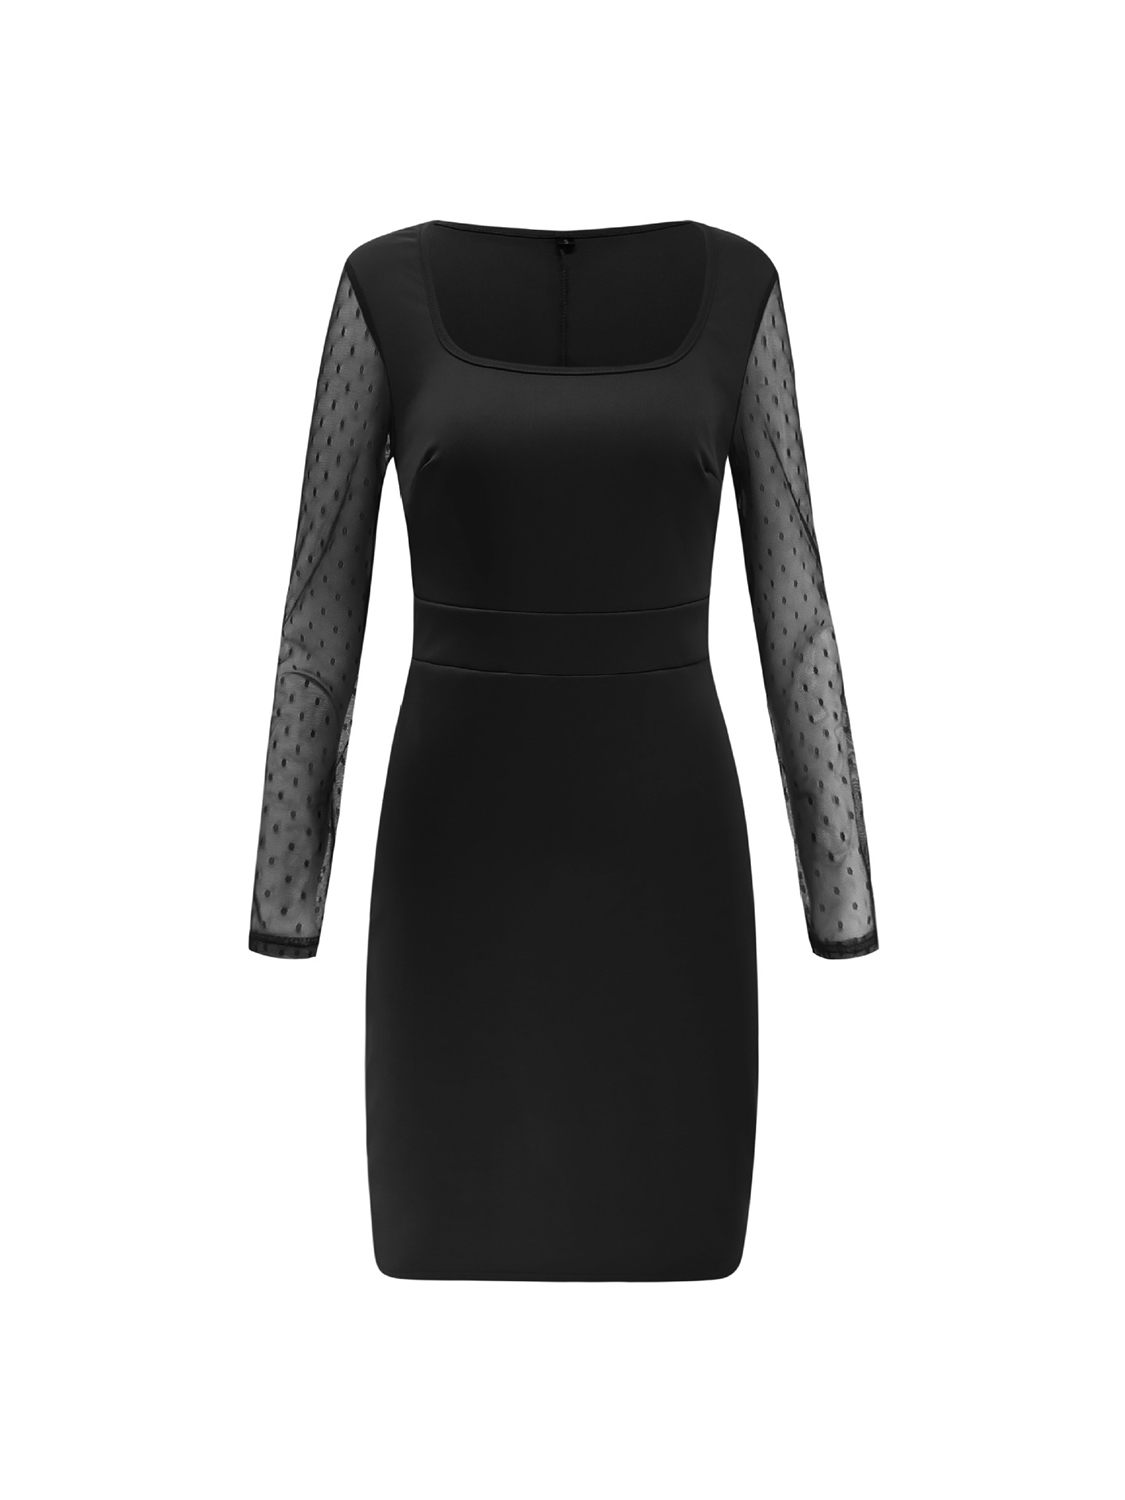 square neck black long sleeve dress